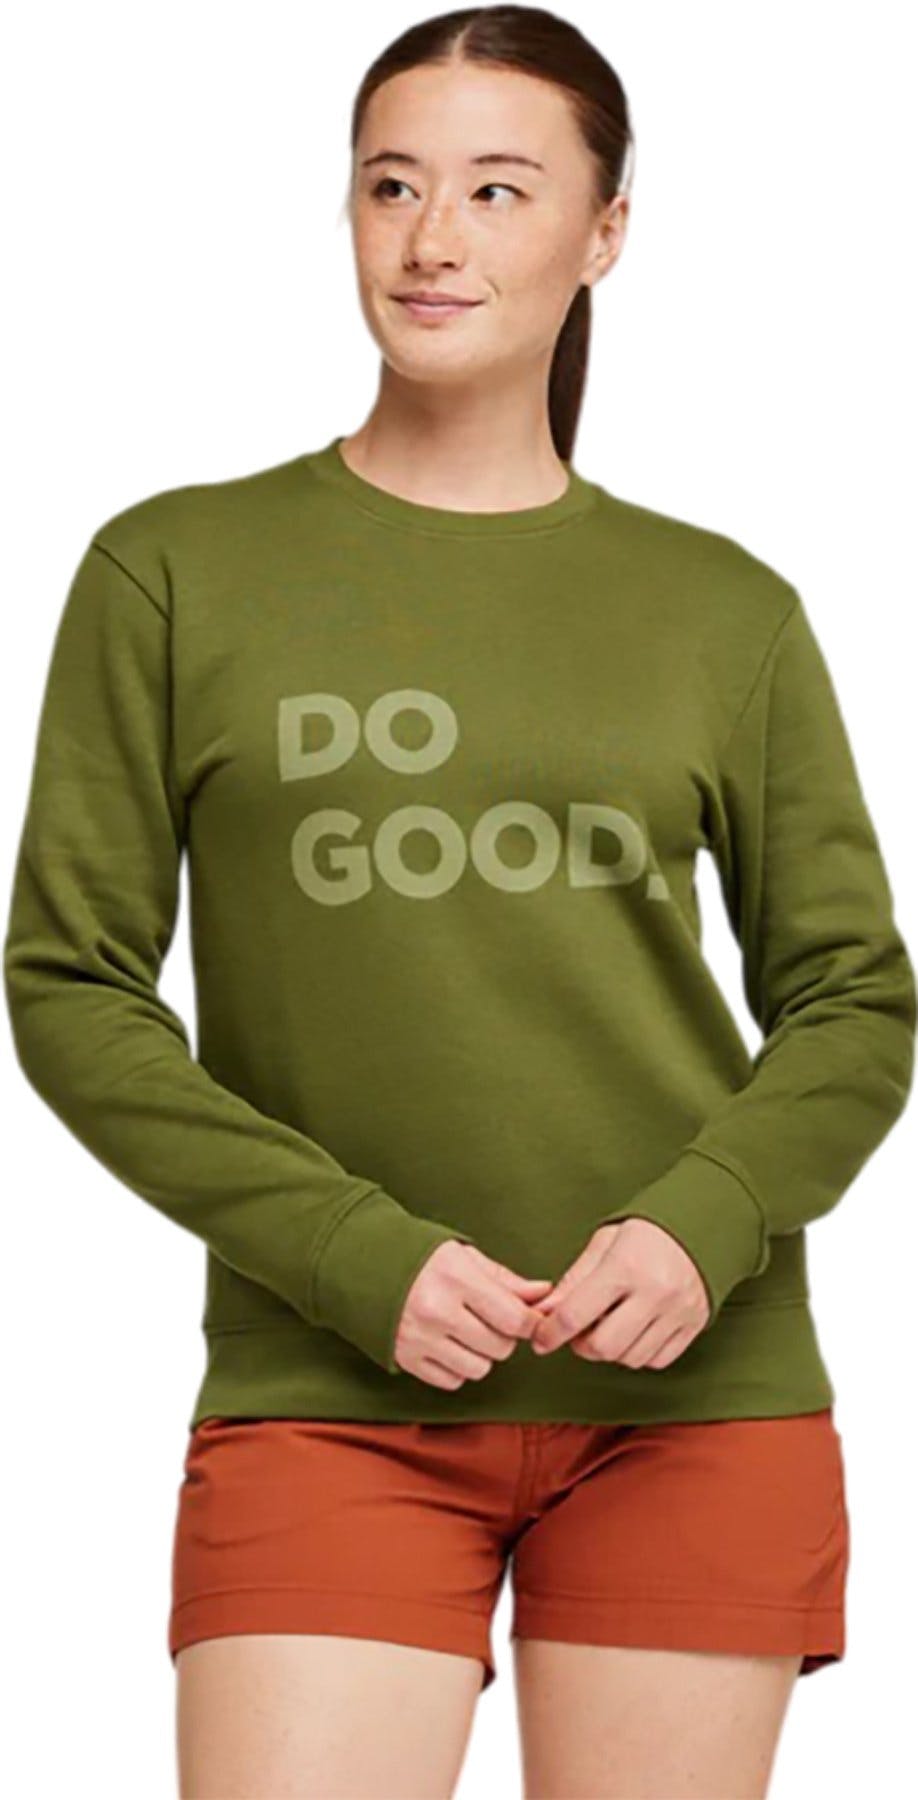 Product image for Do Good Crew Sweatshirt - Women's